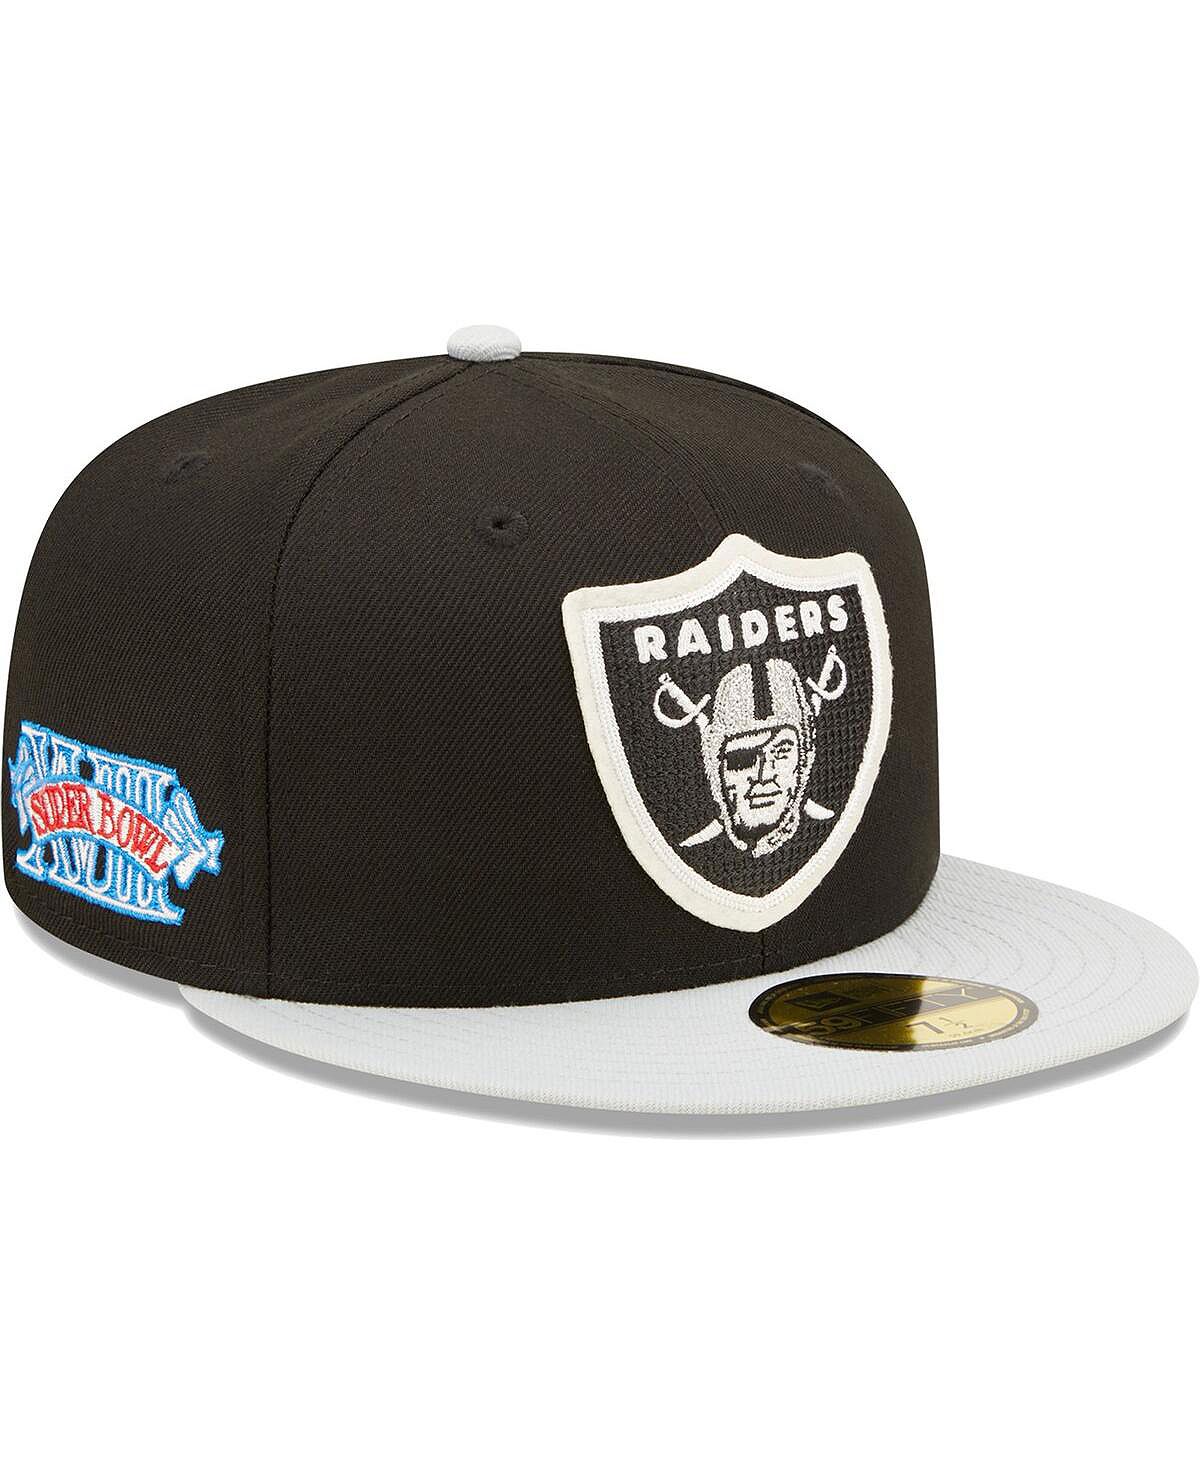 Мужская черная, серебристая приталенная шляпа Las Vegas Raiders Super Bowl XVIII Letterman 59FIFTY New Era